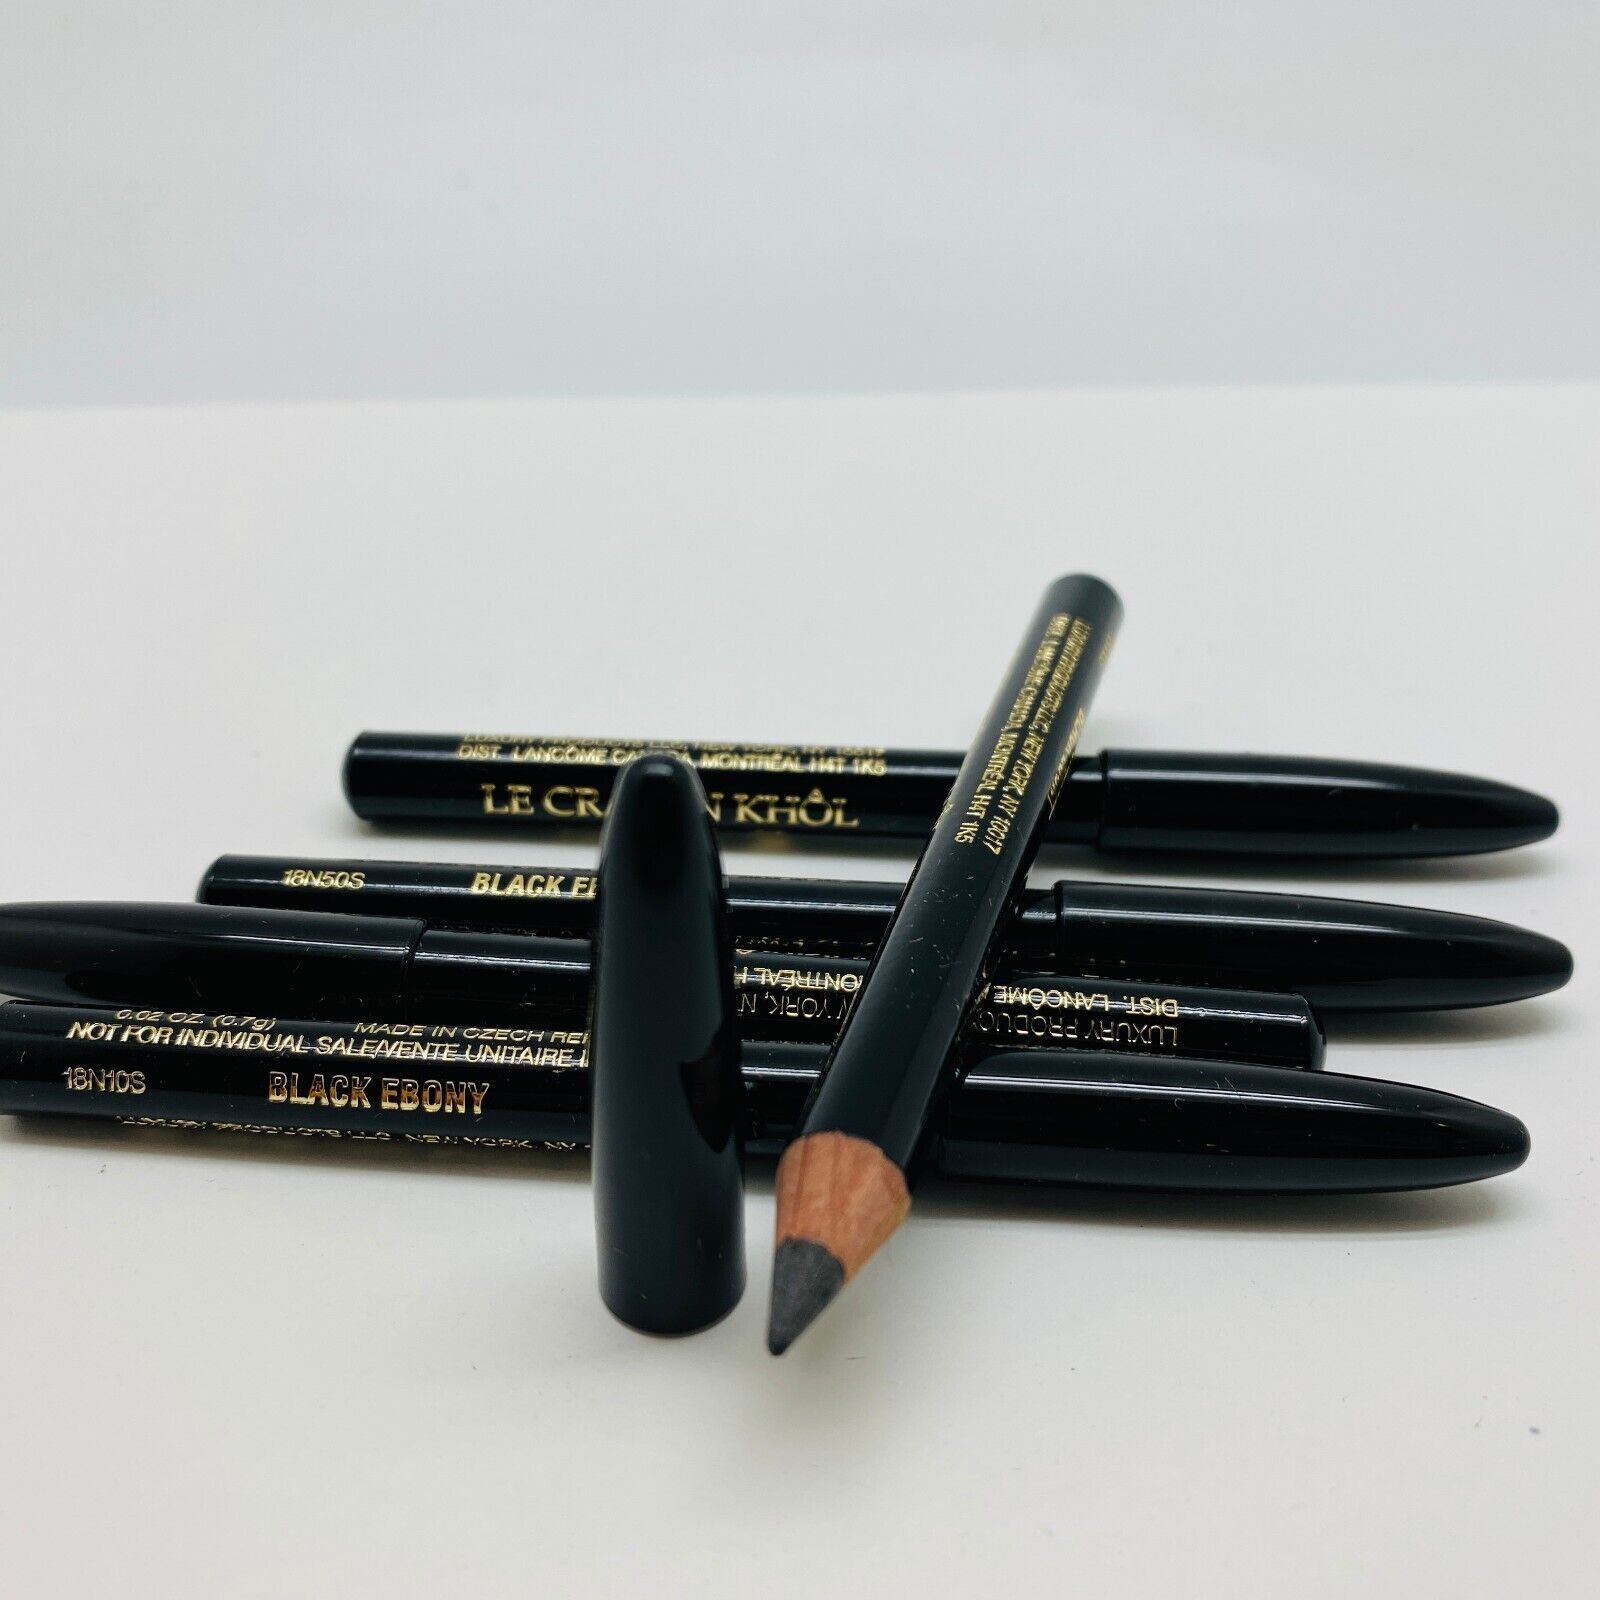 NEW Lancome Le Crayon Khol Eyeliner Pencil #Black Ebony -0.02oz (lot of 5) - NEW Lancôme Lancome Le Crayon Khol